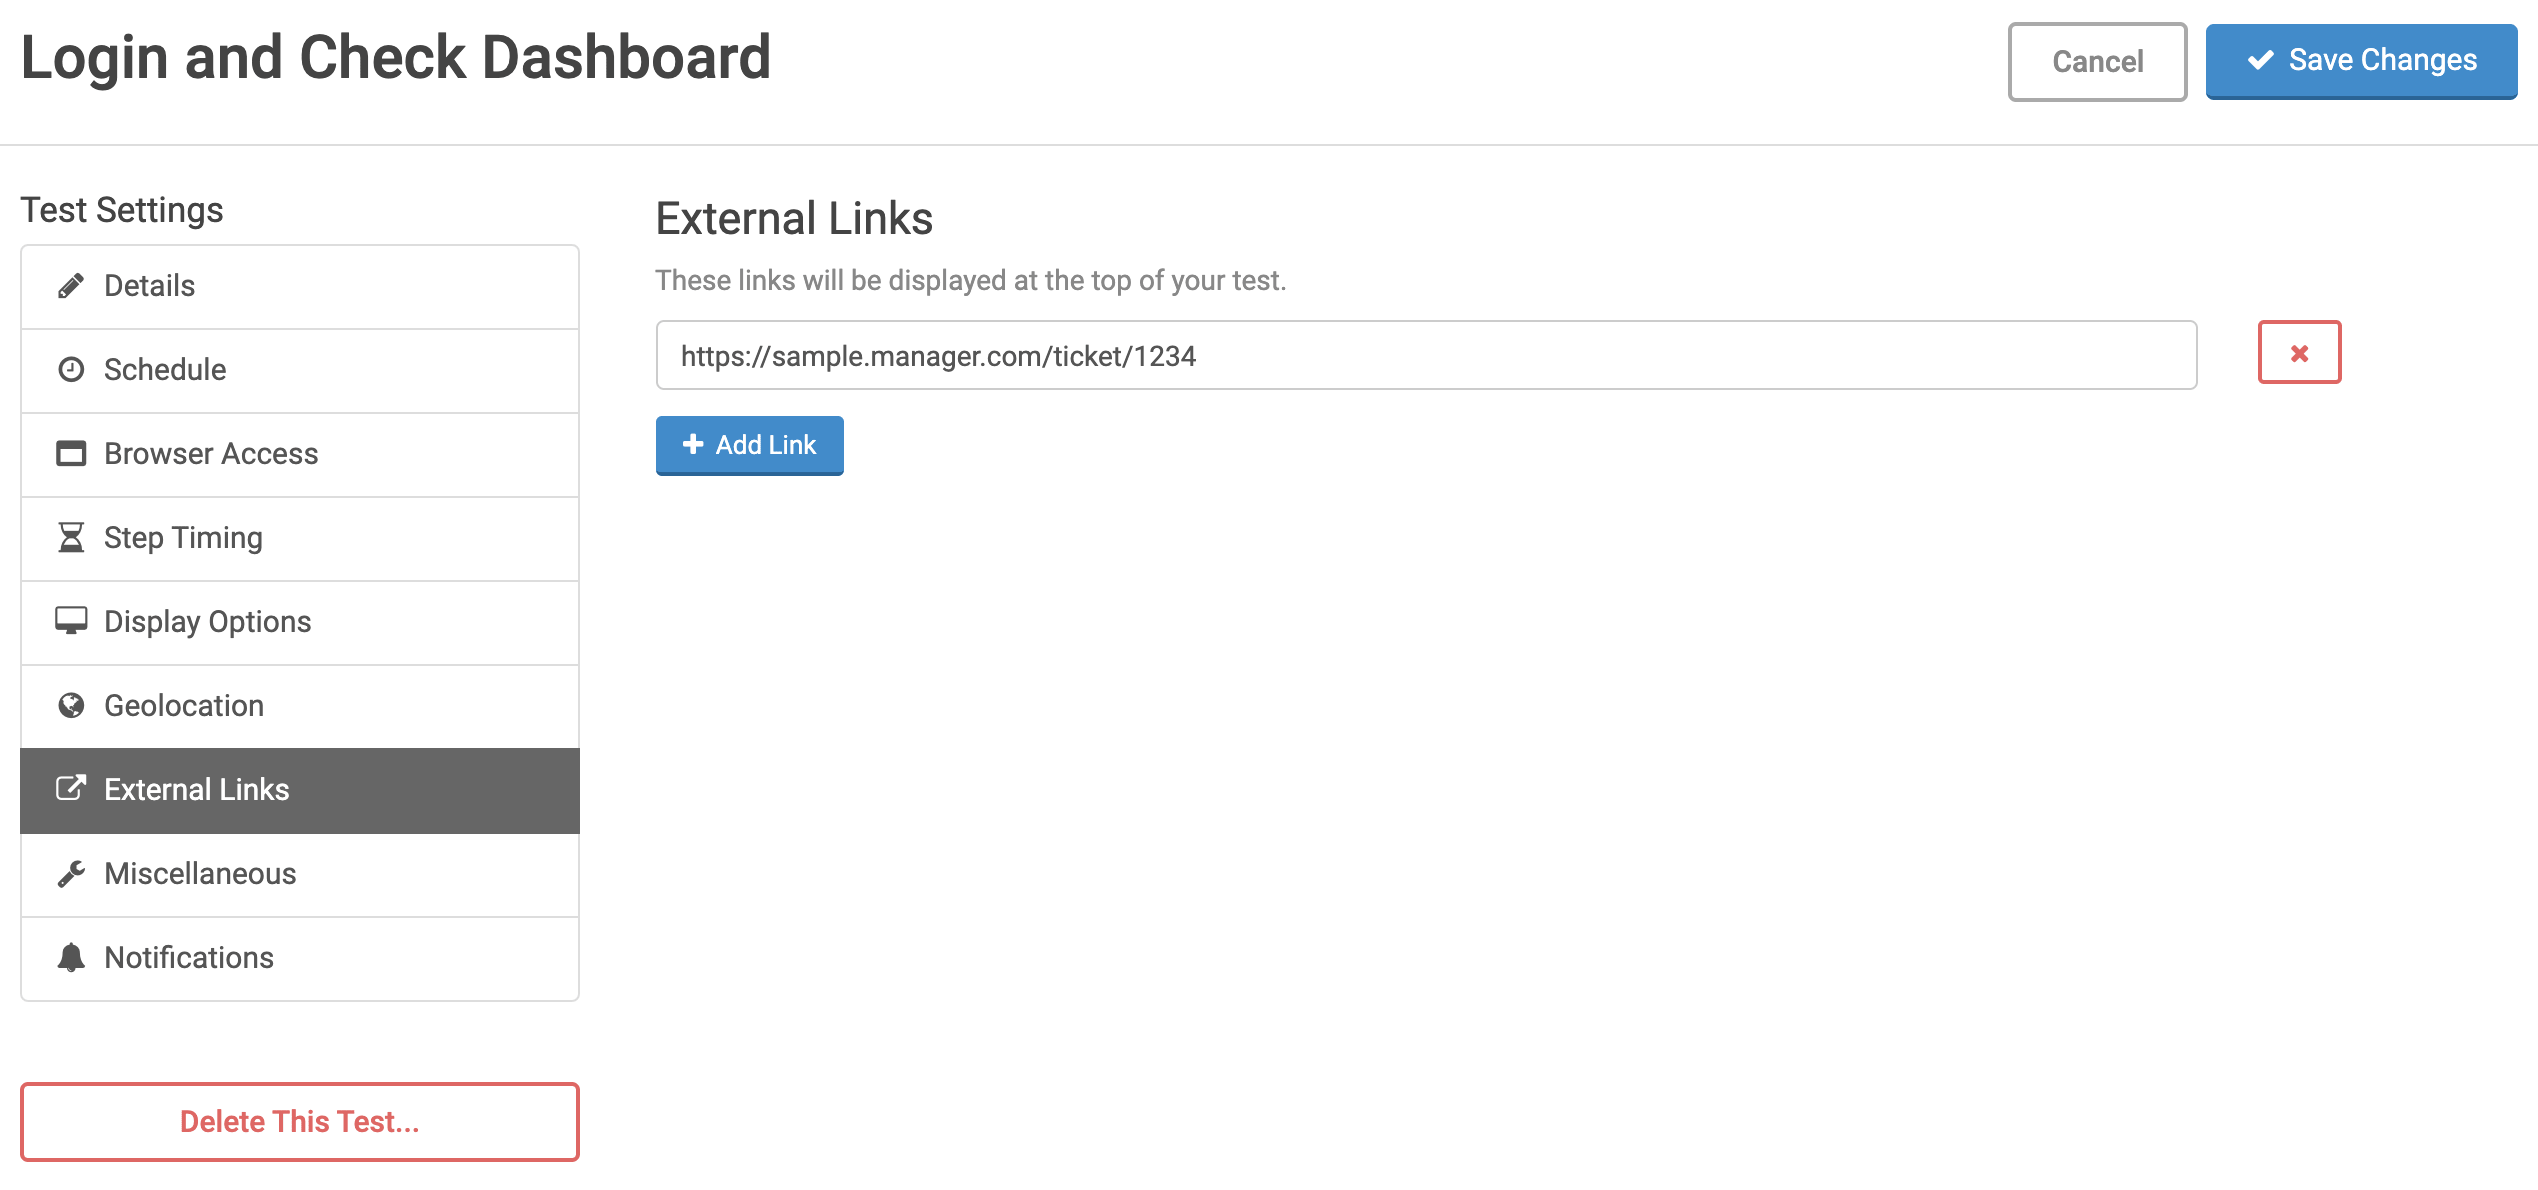 External Links settings